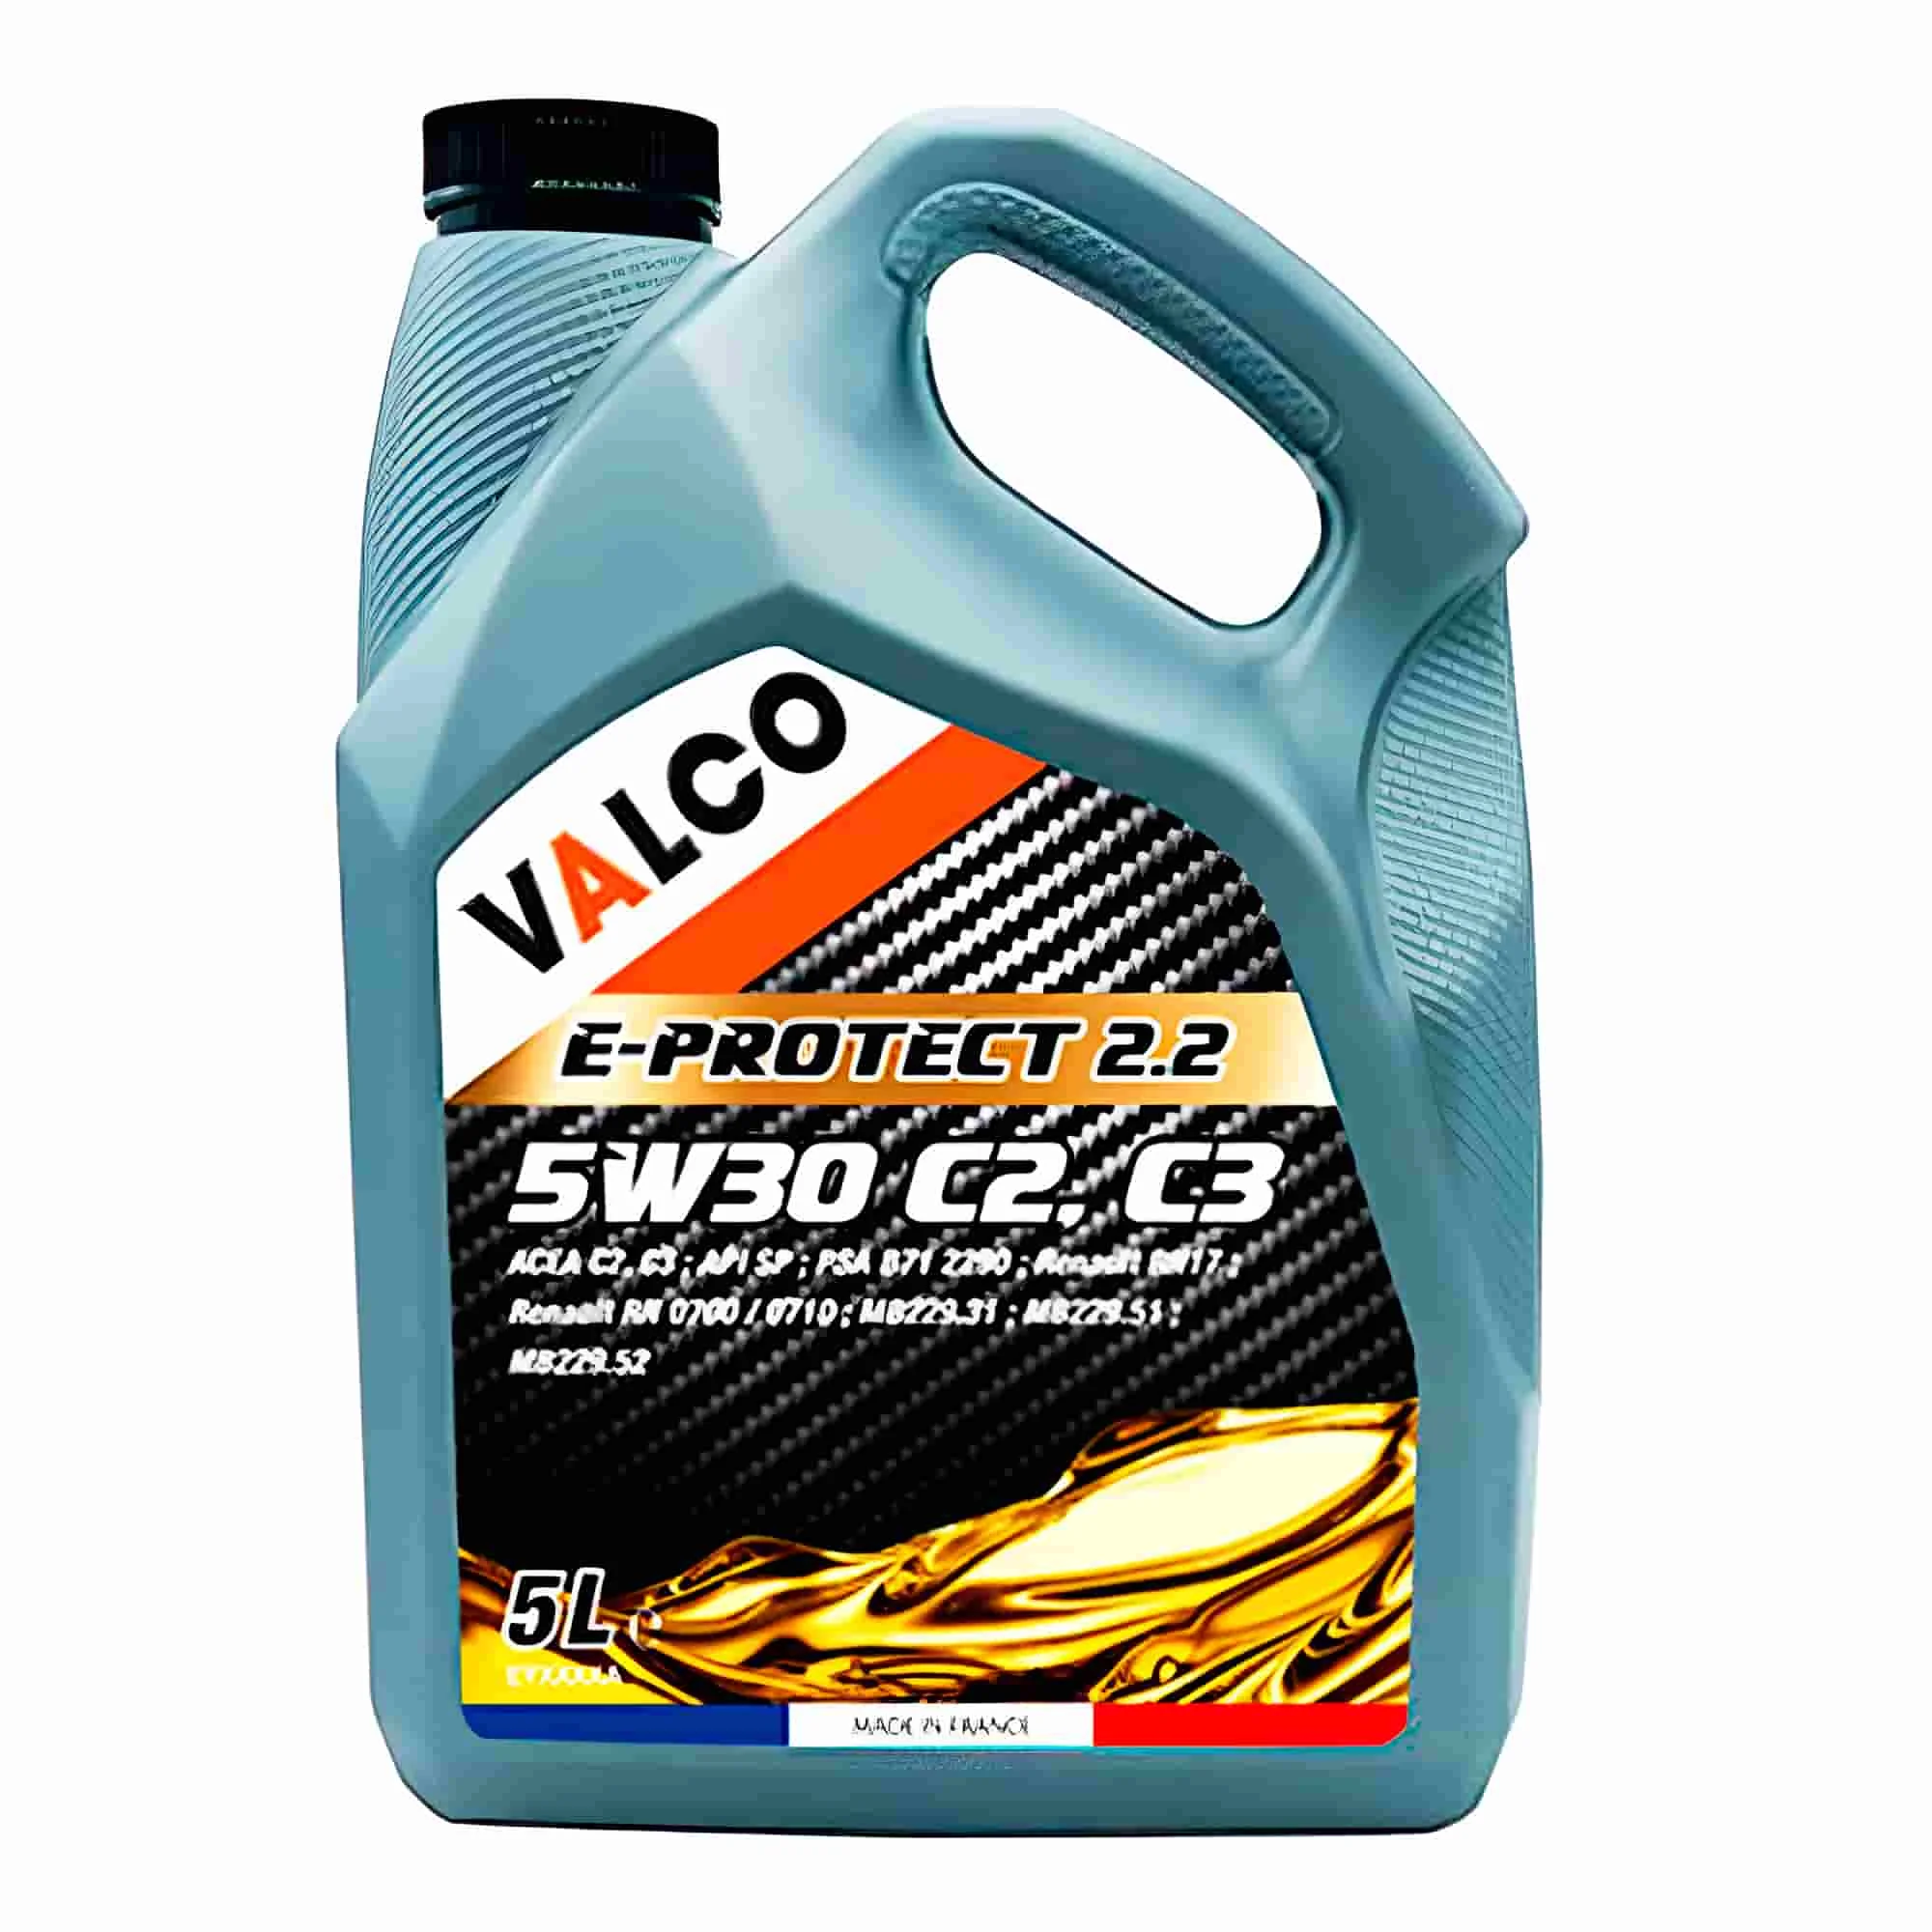 Моторное масло Valco E-PROTECT 2.2 5W-30 5л (PF021155)